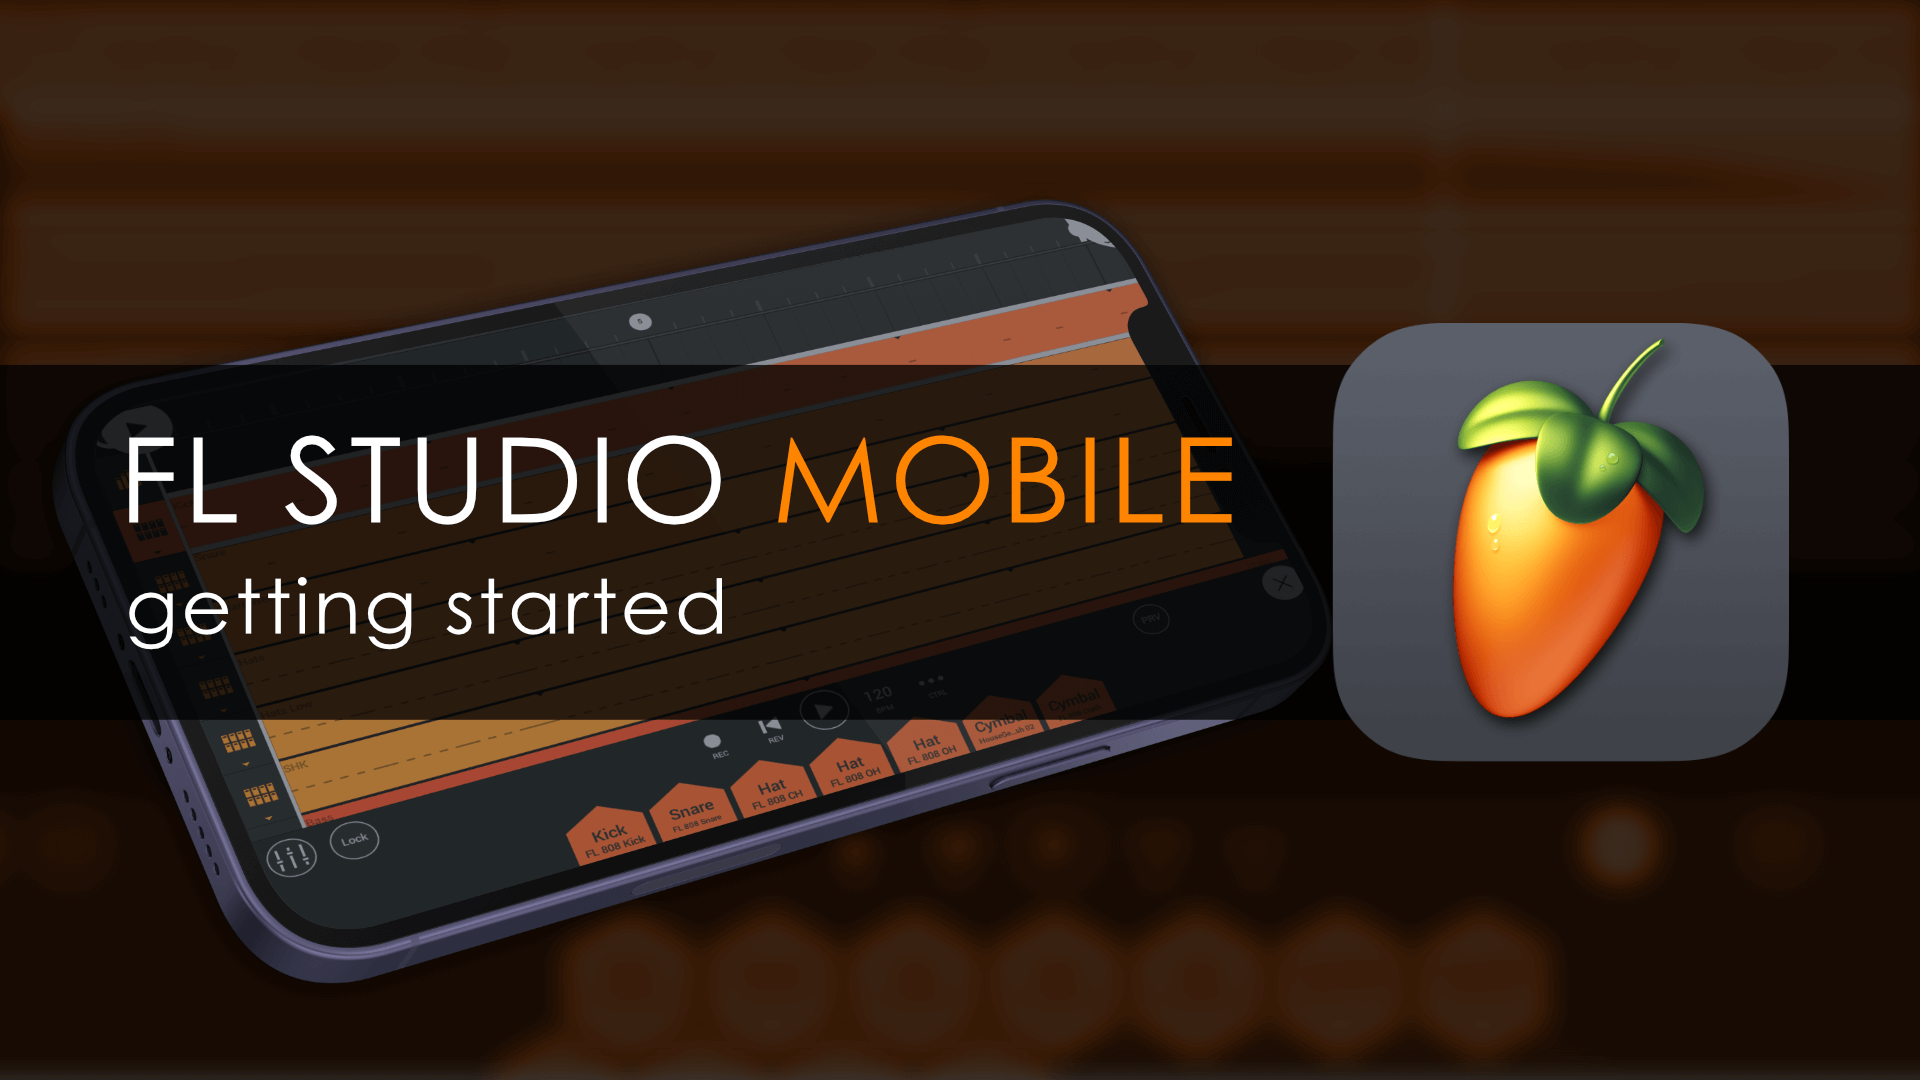 FL Studio is Coming to Fruity Mobiles iPhone, iPad - Well, Sort Of